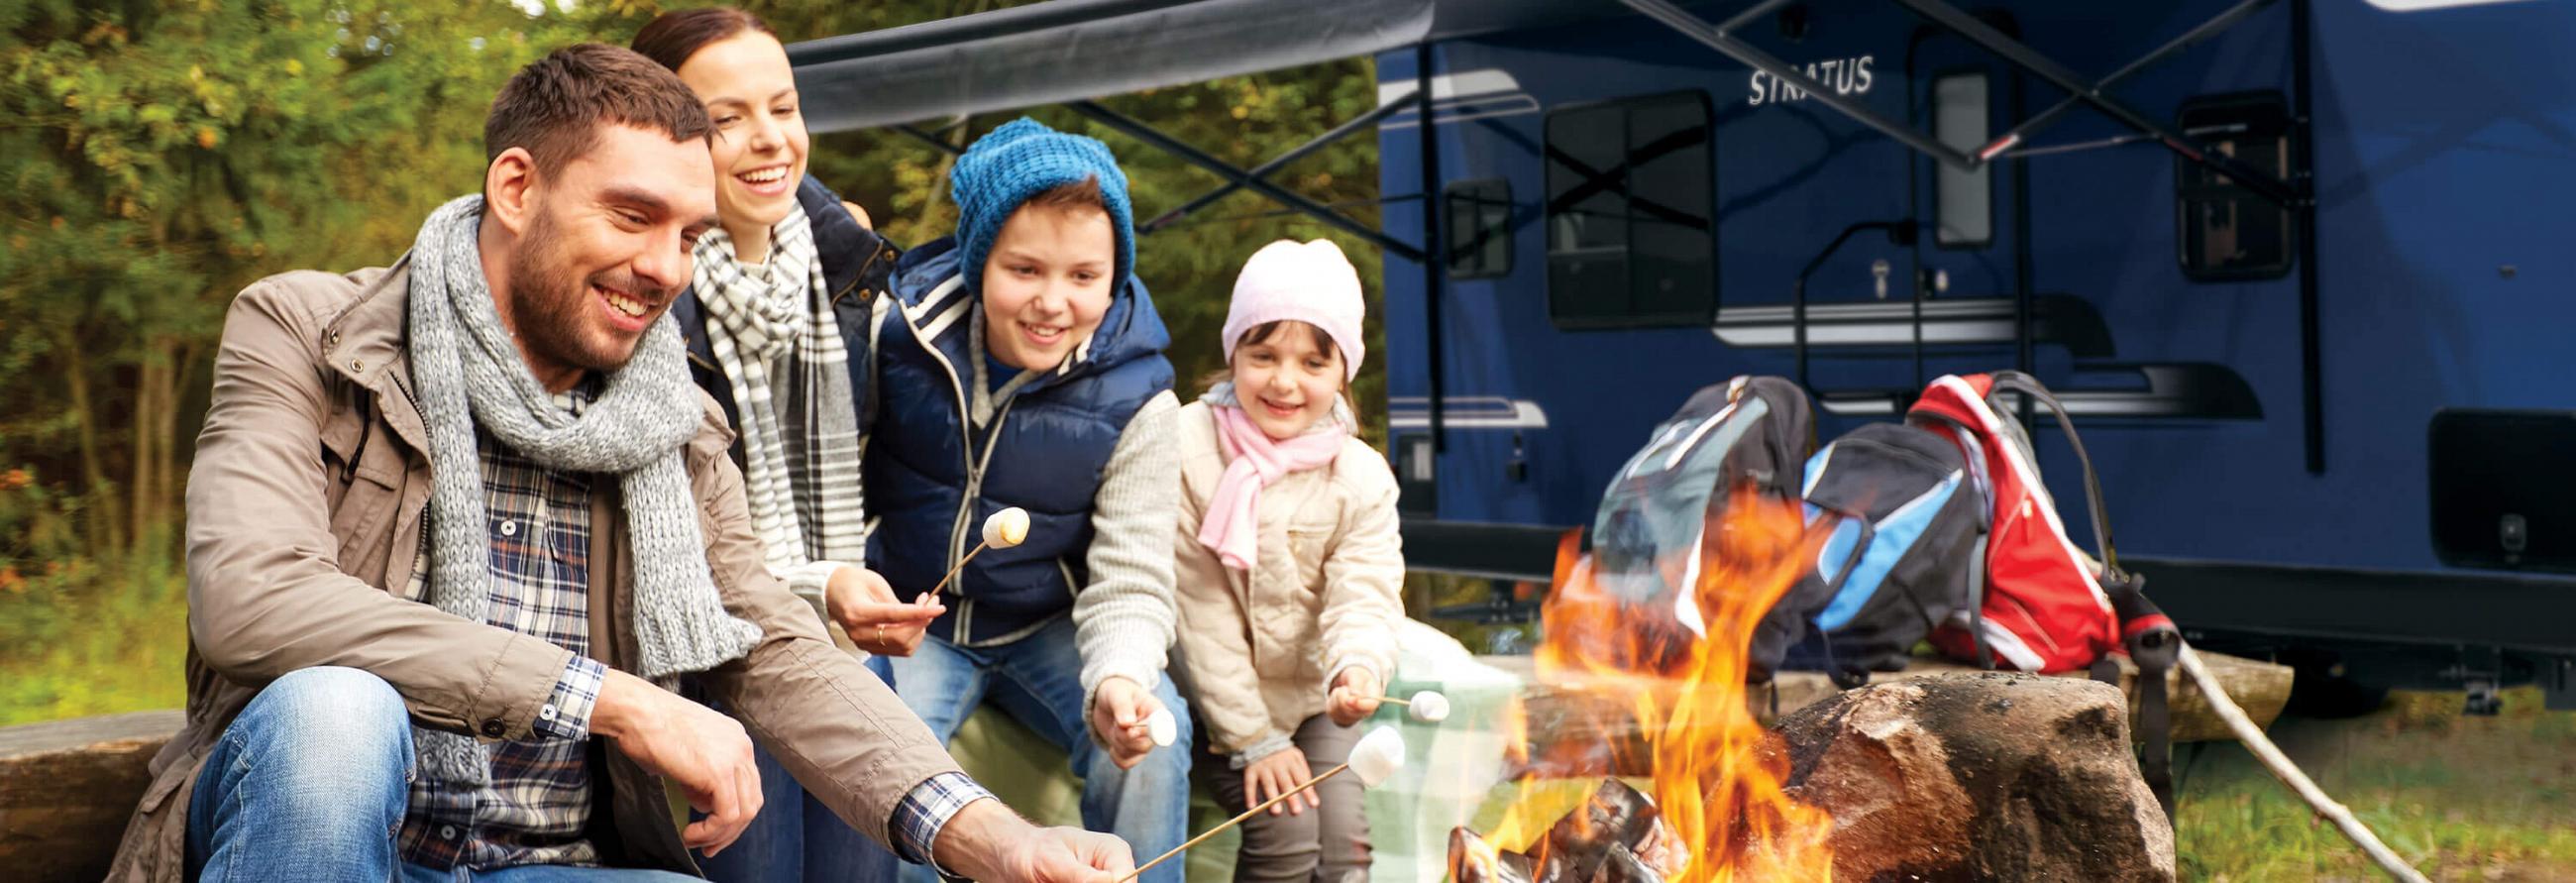 2019 Venture RV Stratus Travel Trailer with Family sitting around Campfire